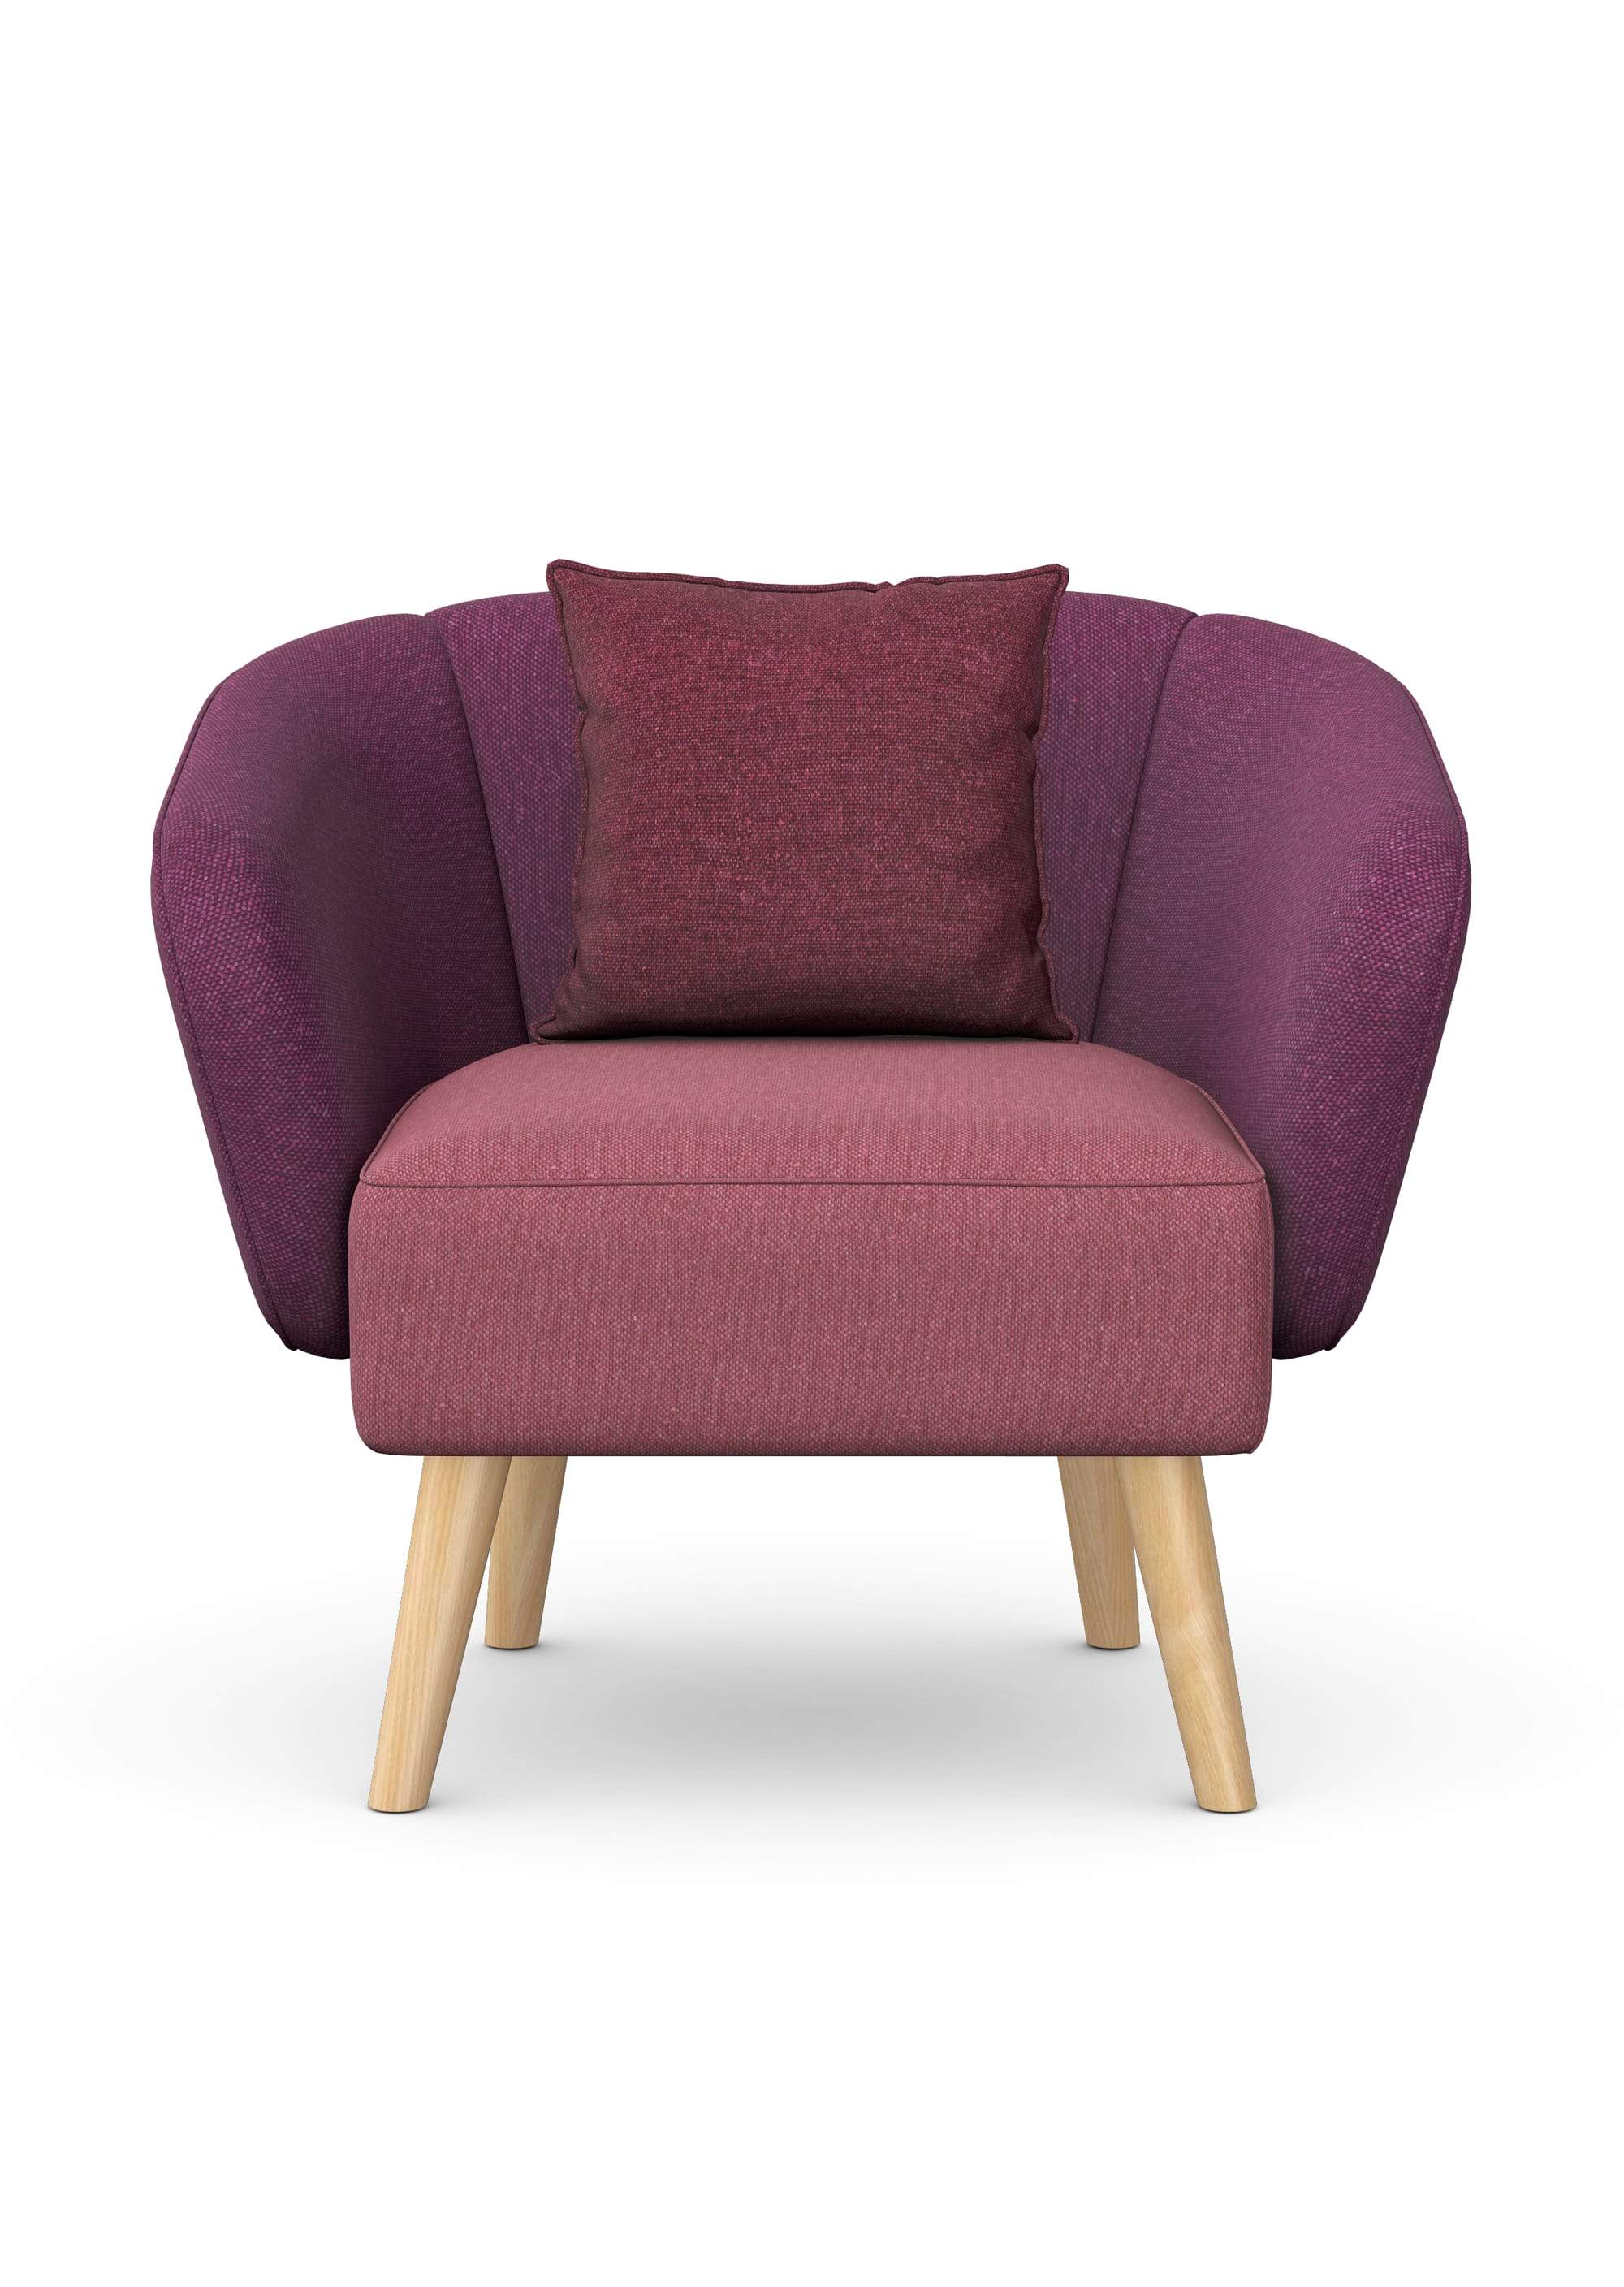 ASPECT - One Seat Sofa, Wooden Legs